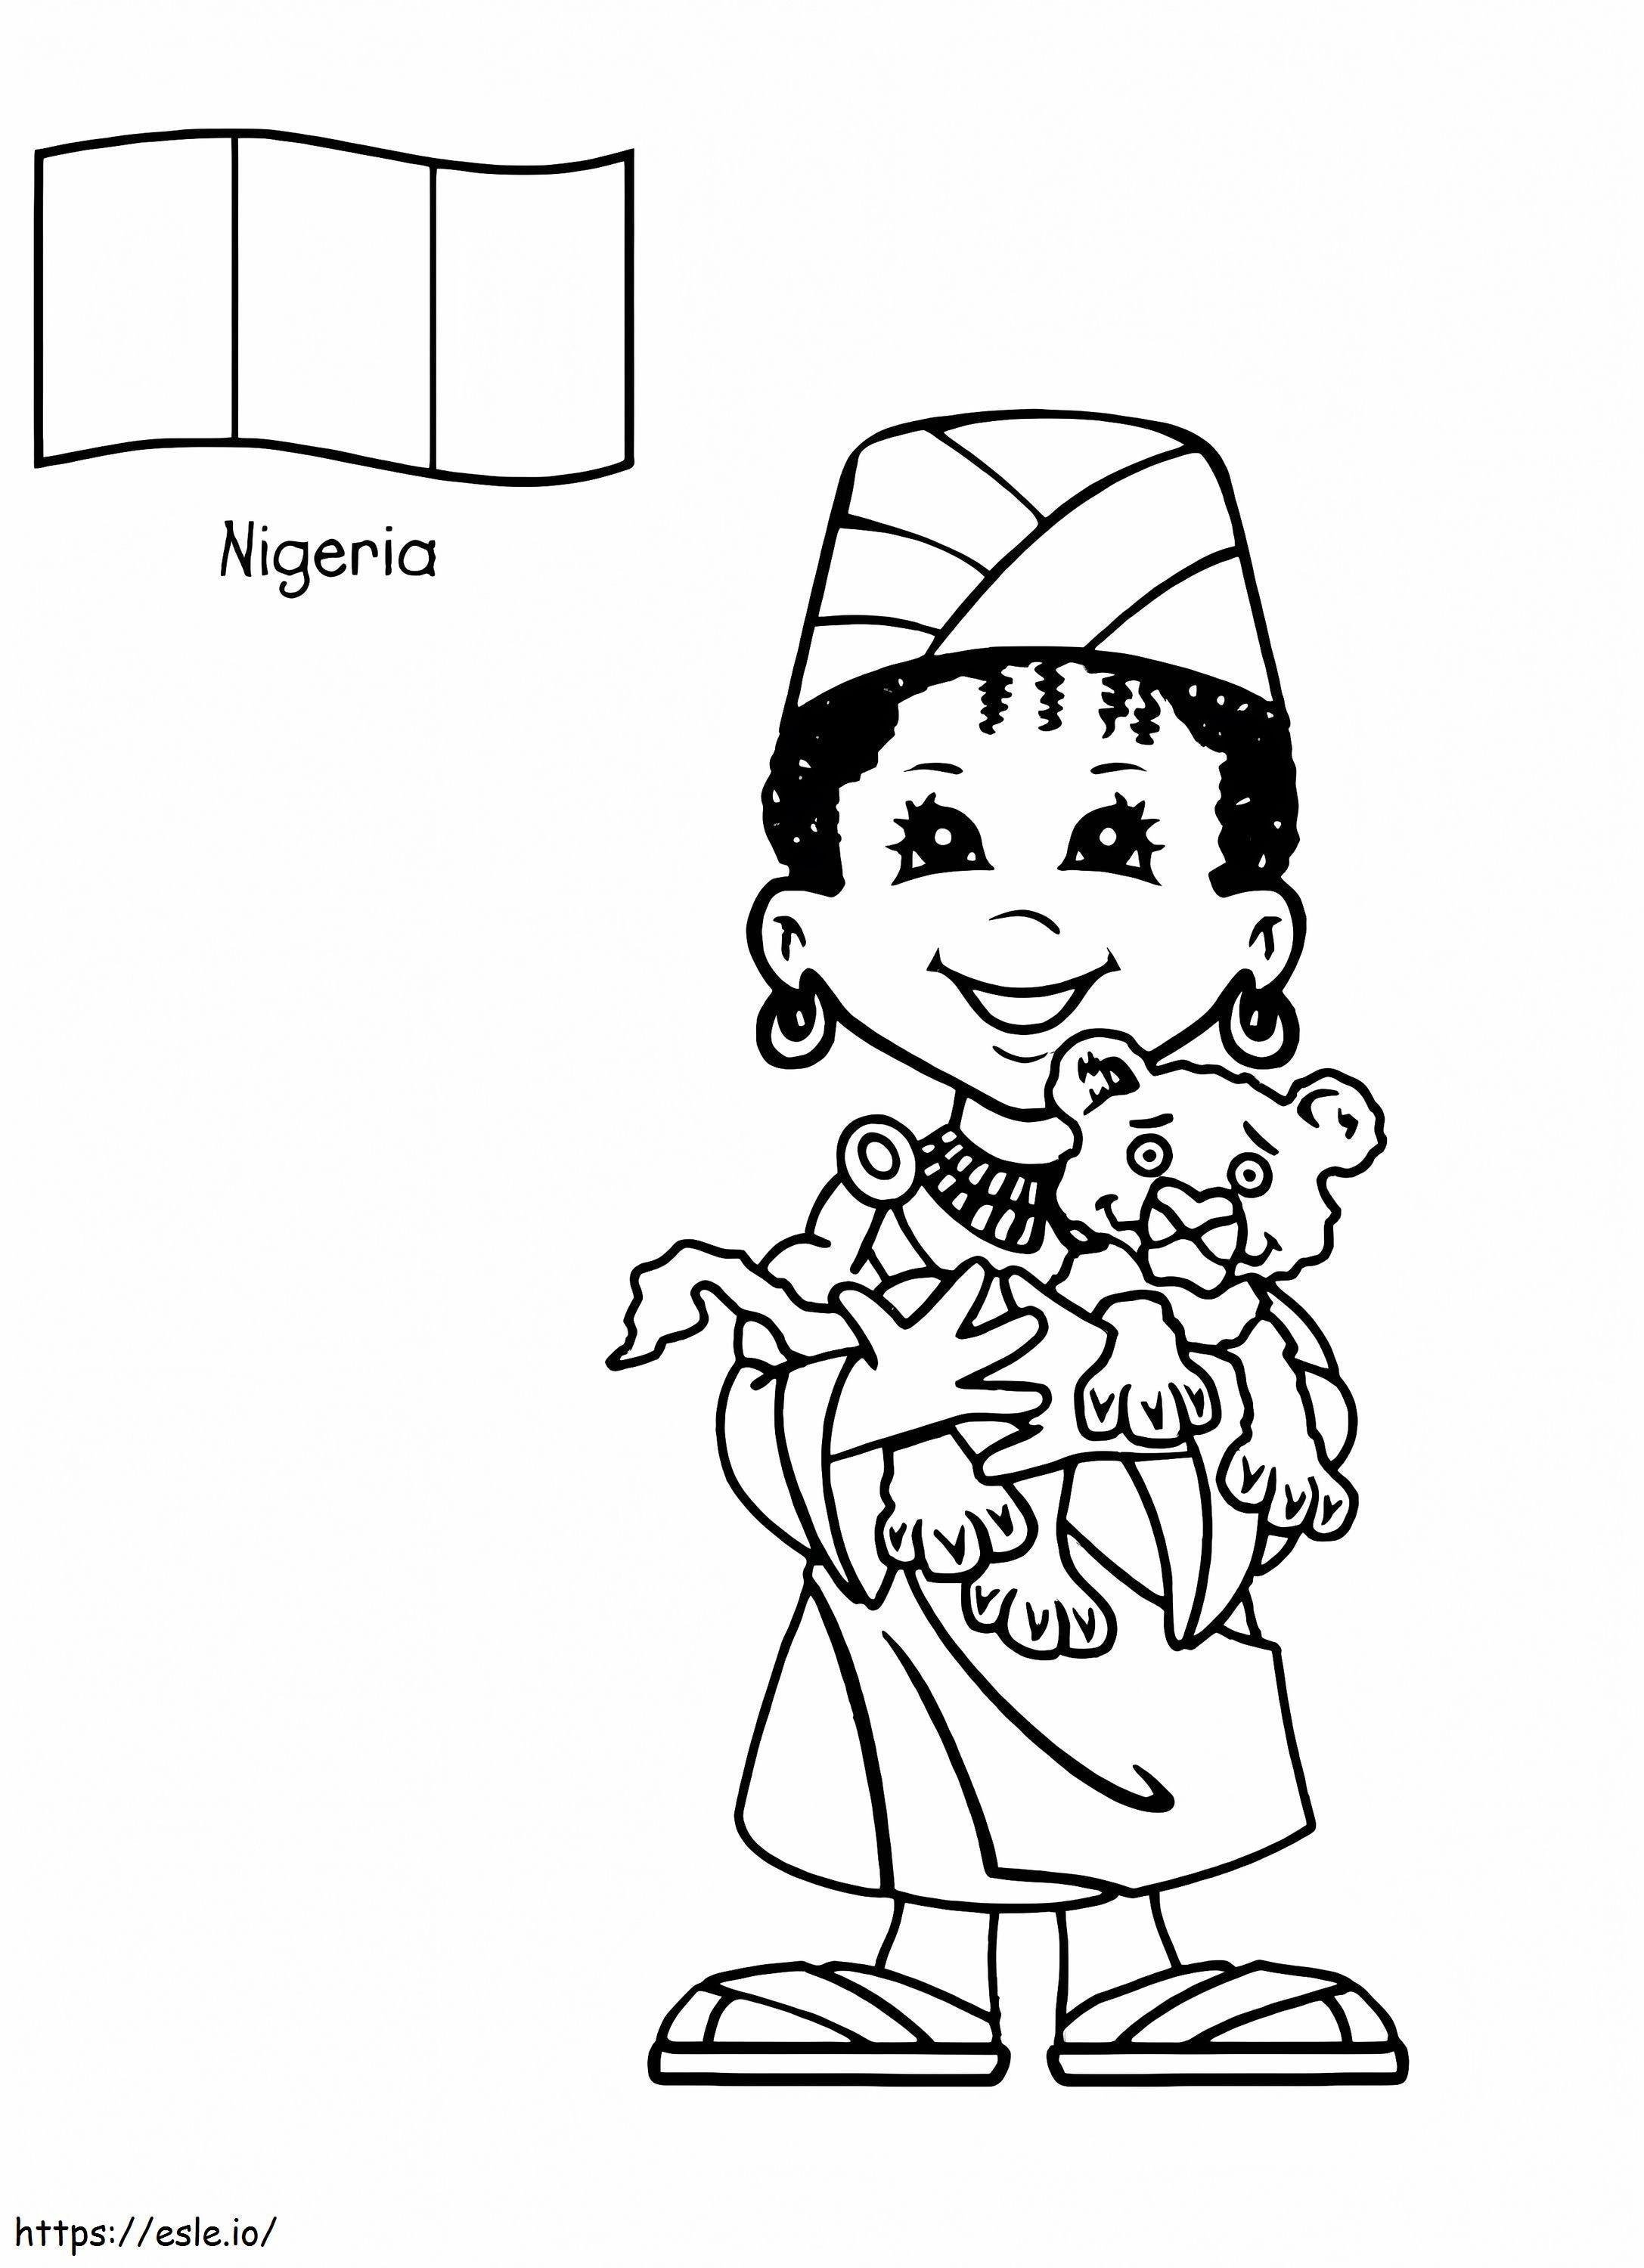 Nigerian Kid coloring page